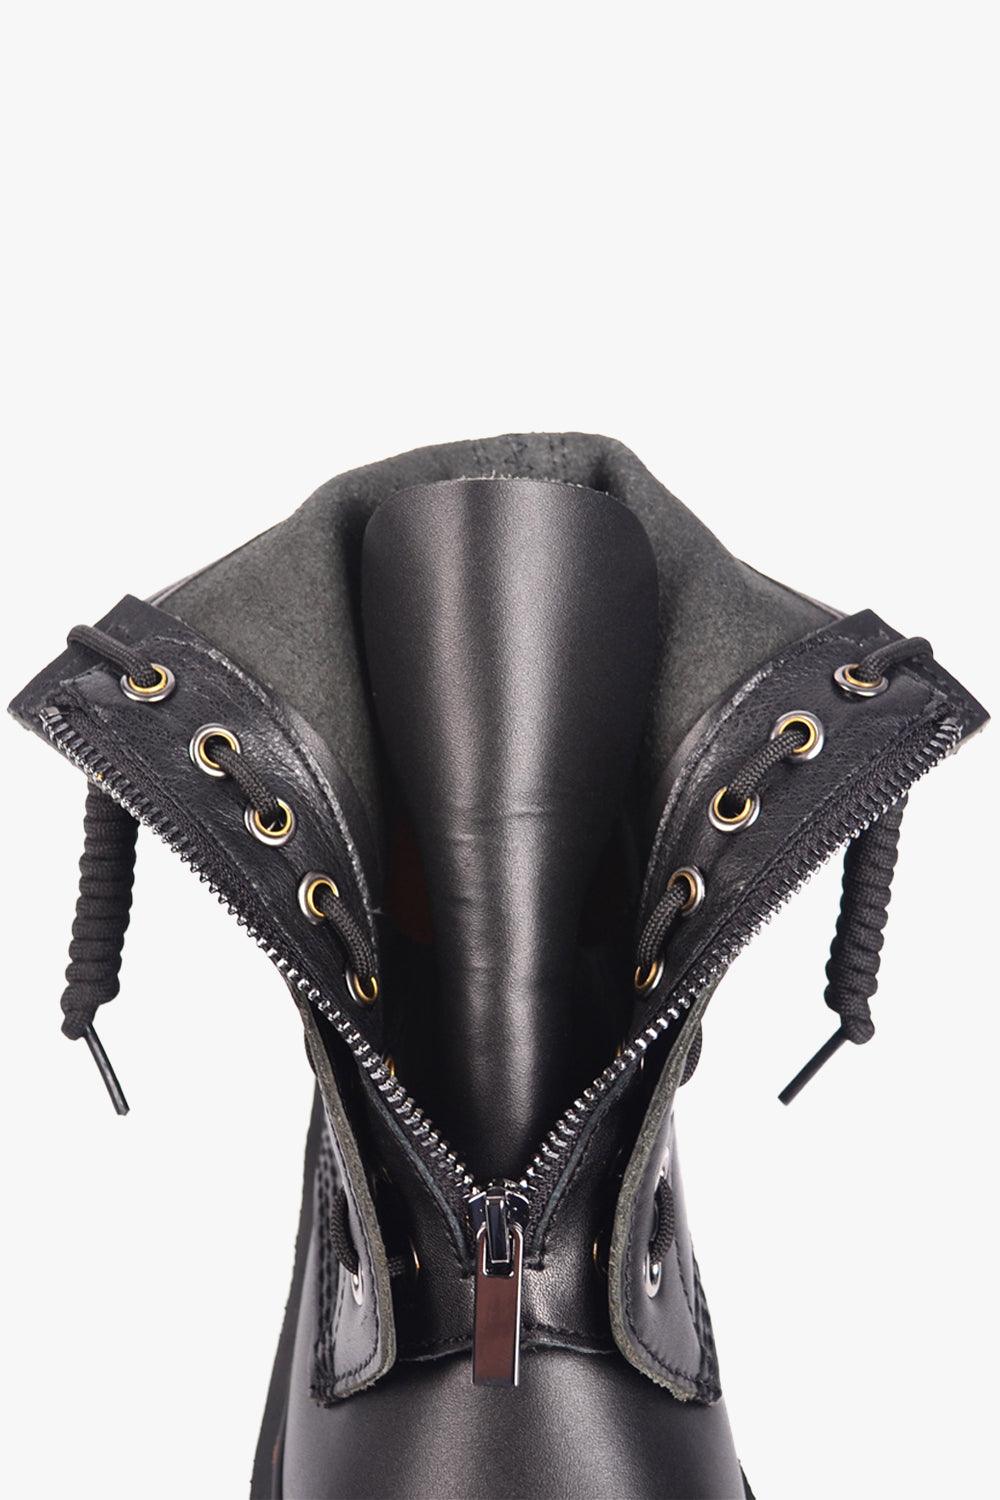 Martens Boots Lace Replacer Zipper 8 Holes • Aesthetic Shop